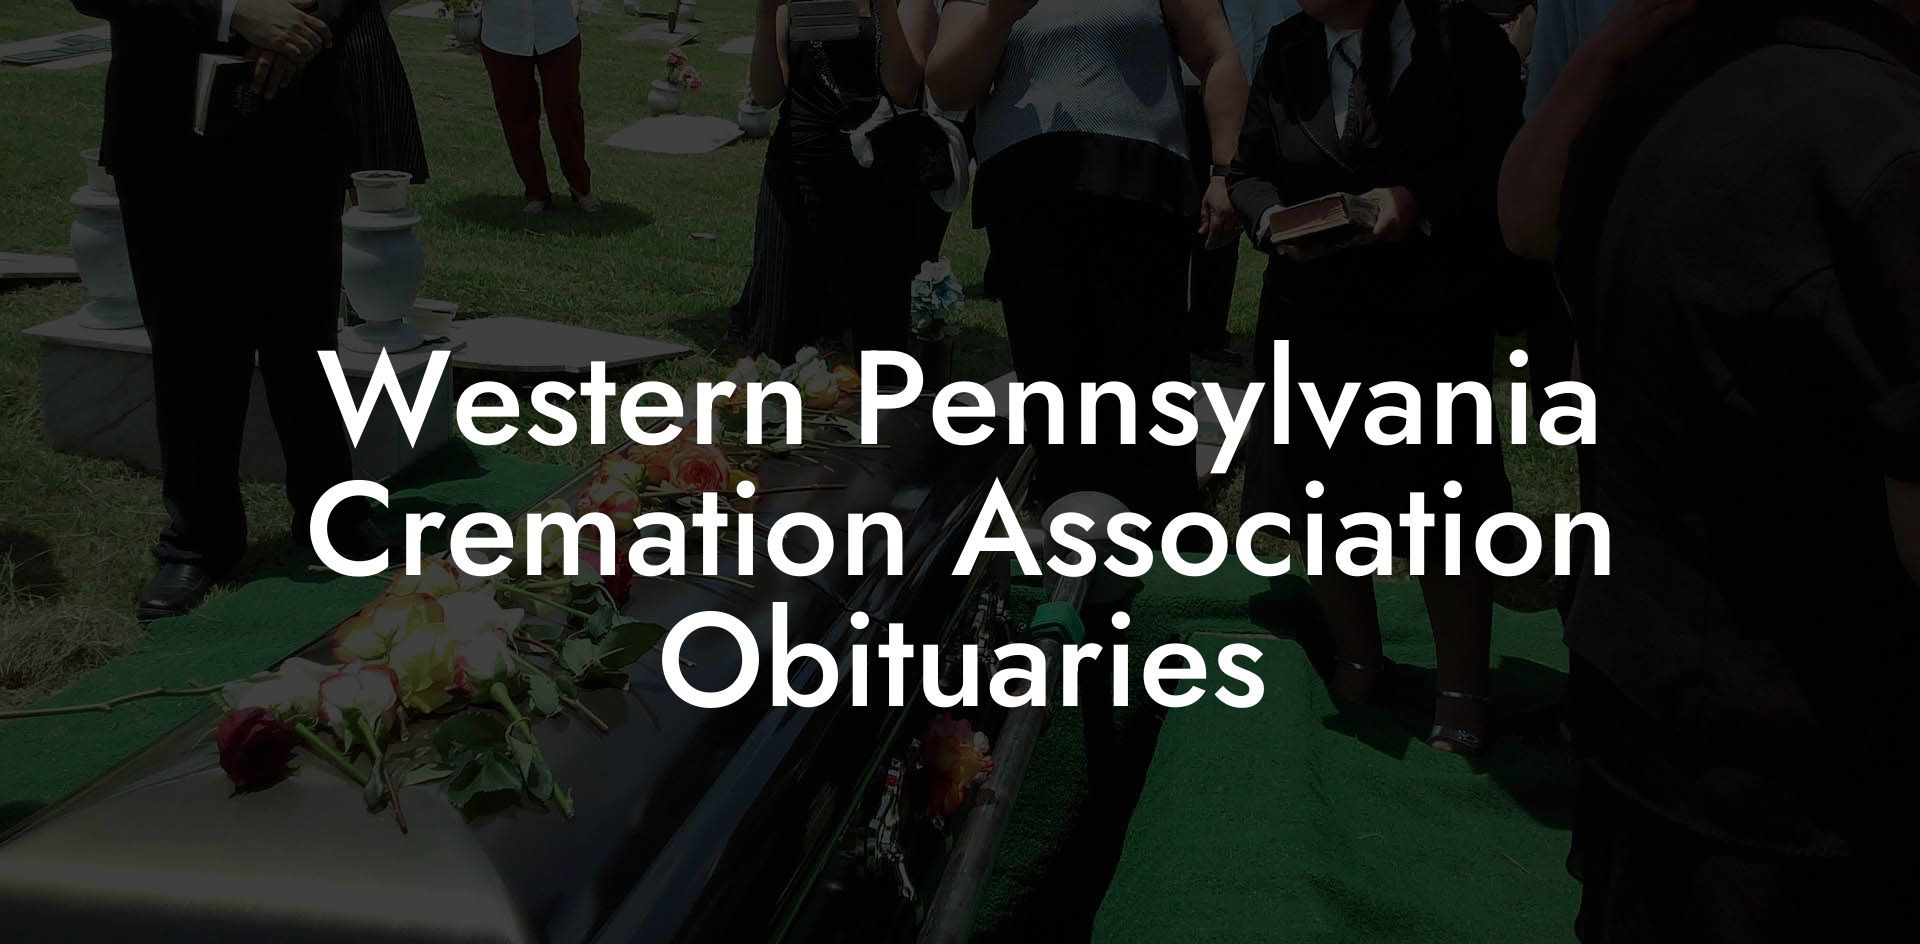 Western Pennsylvania Cremation Association Obituaries